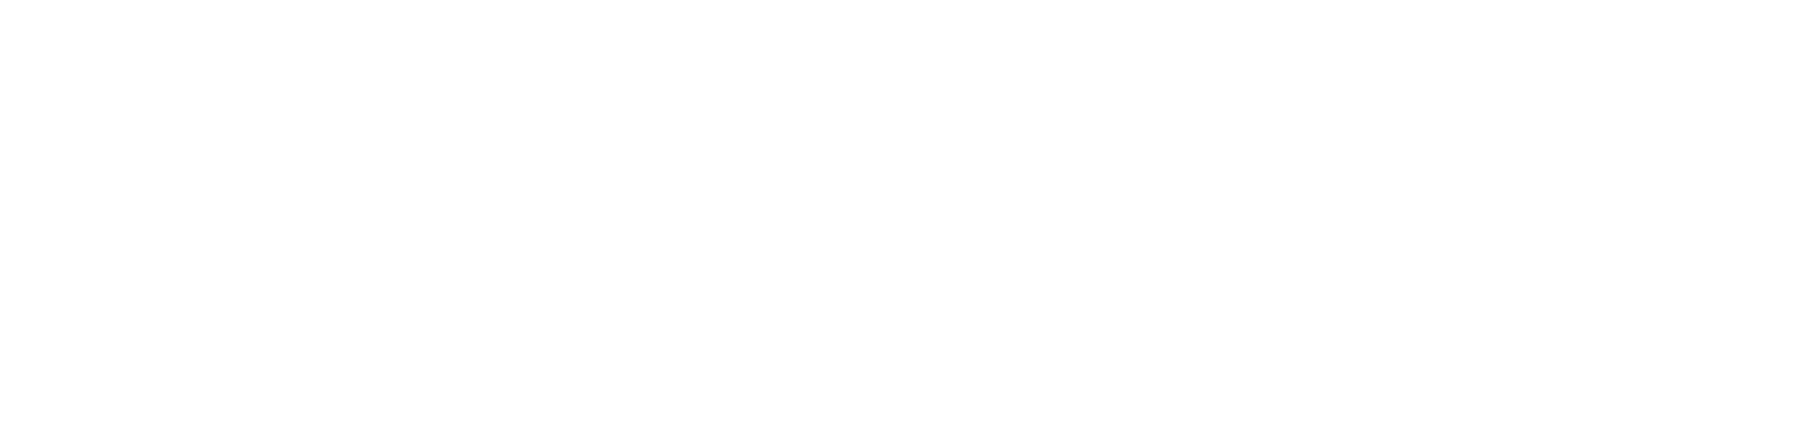 UFO Files logo